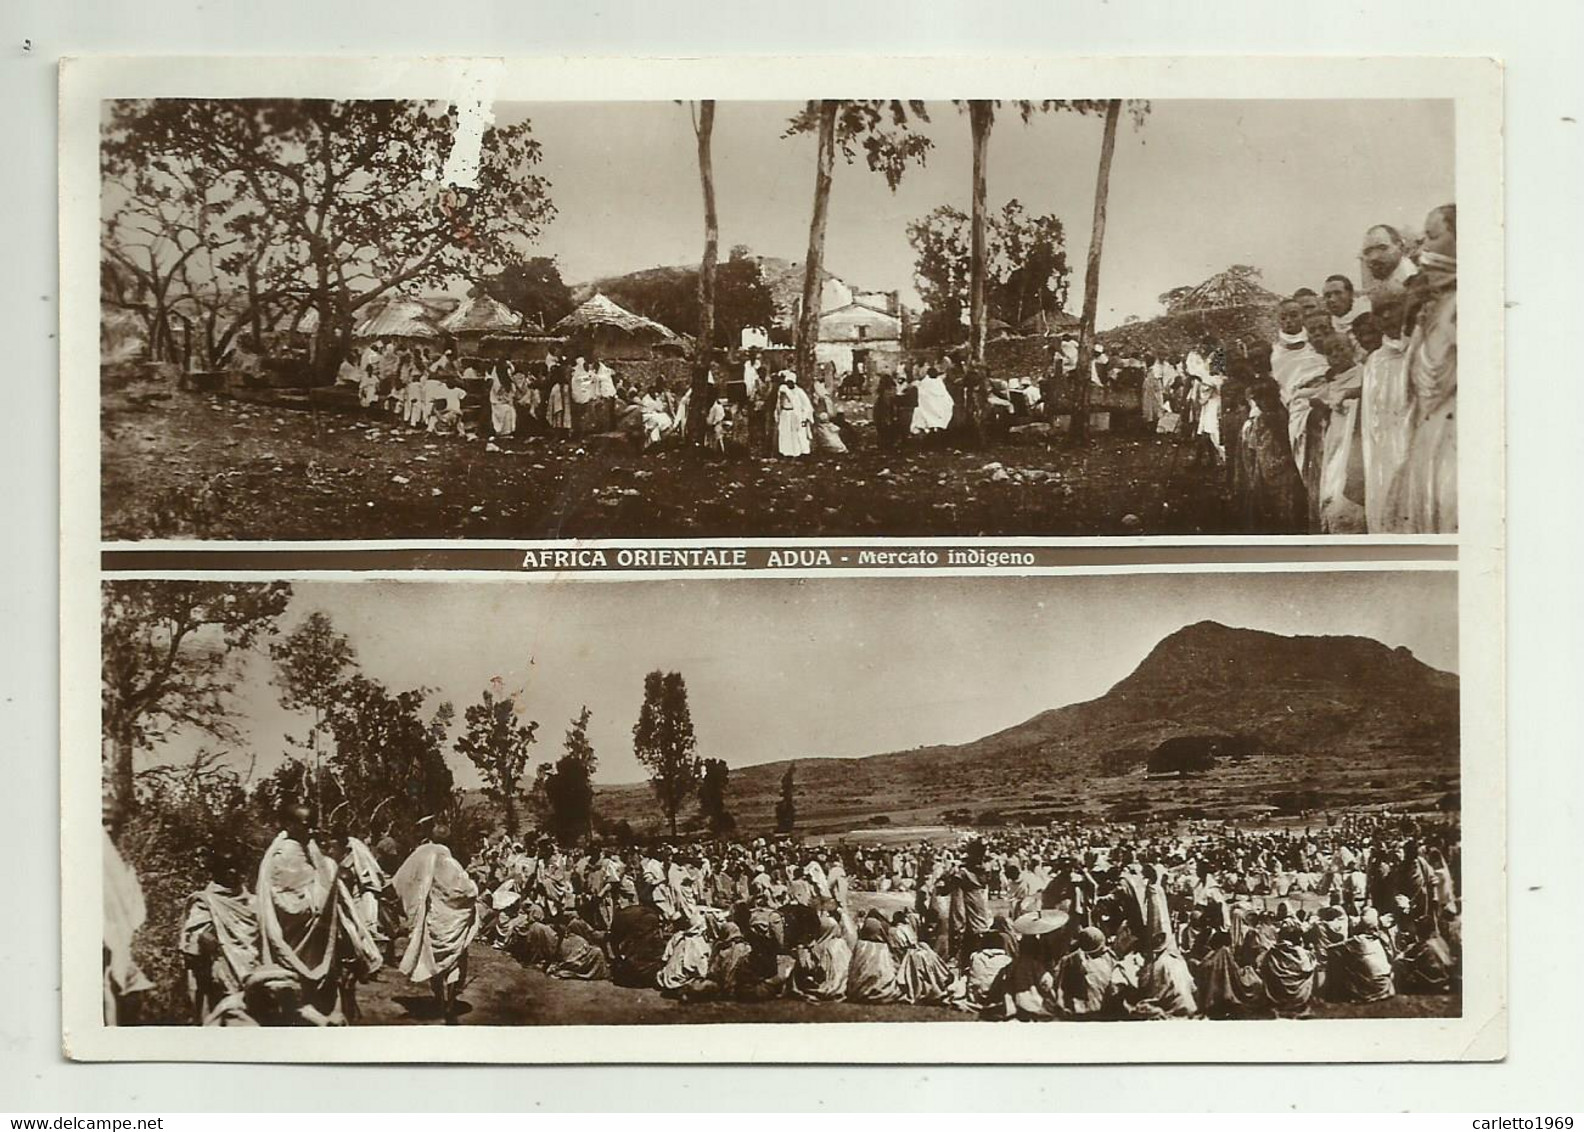 AFRICA ORIENTALE ADUA - MERCATO INDIGENO 1938 - NV FG ( SEGNO PARTE SX ) - Äthiopien